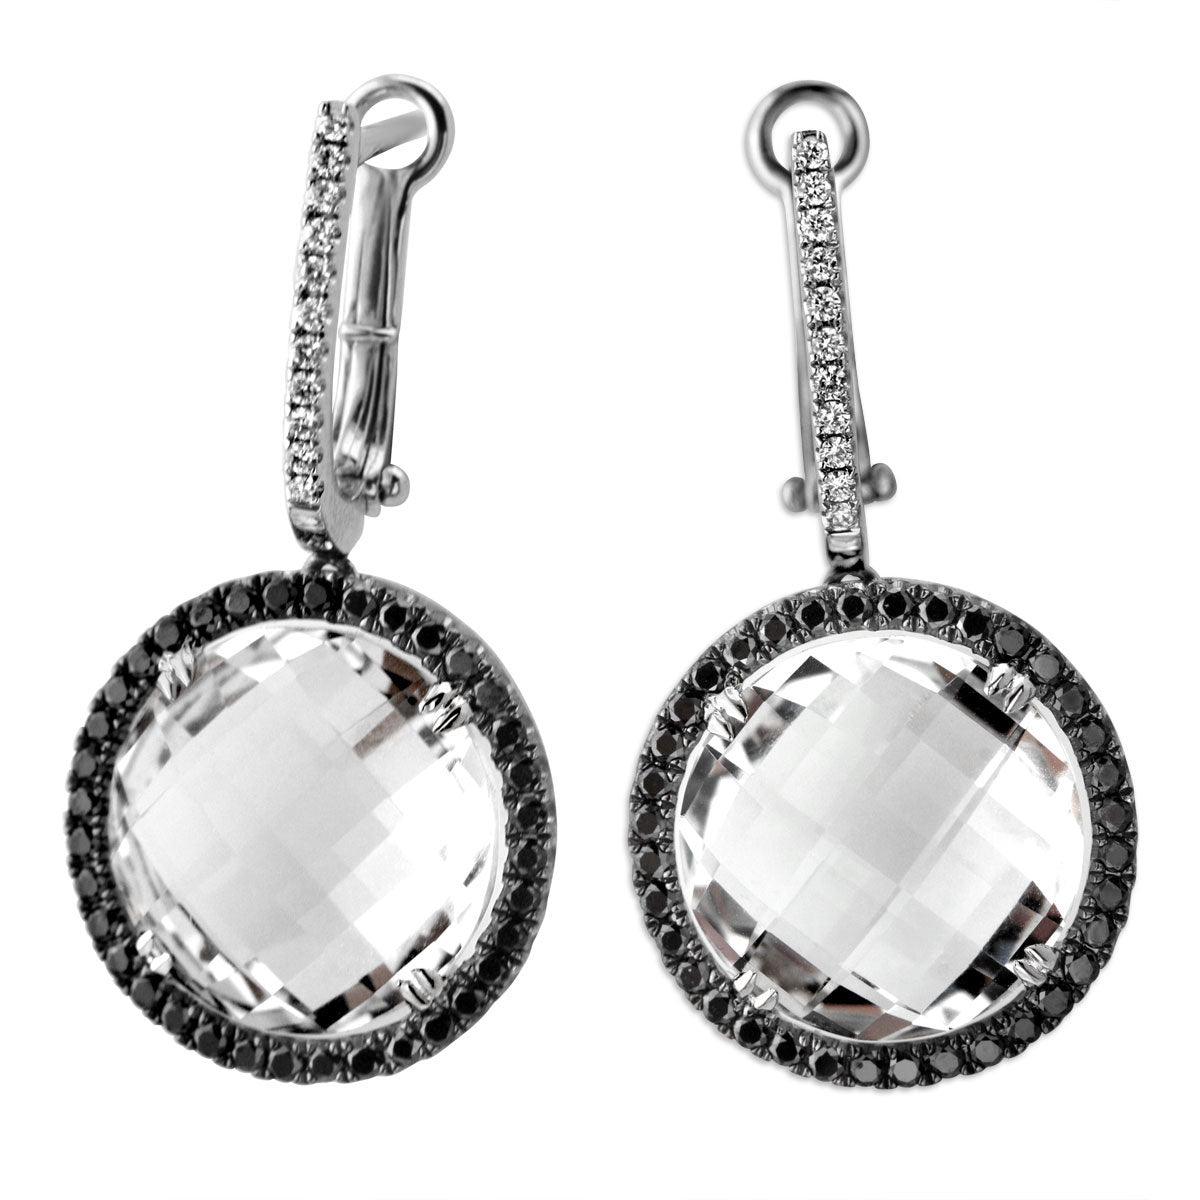 White Topaz With Black & White Diamonds Earrings-339568